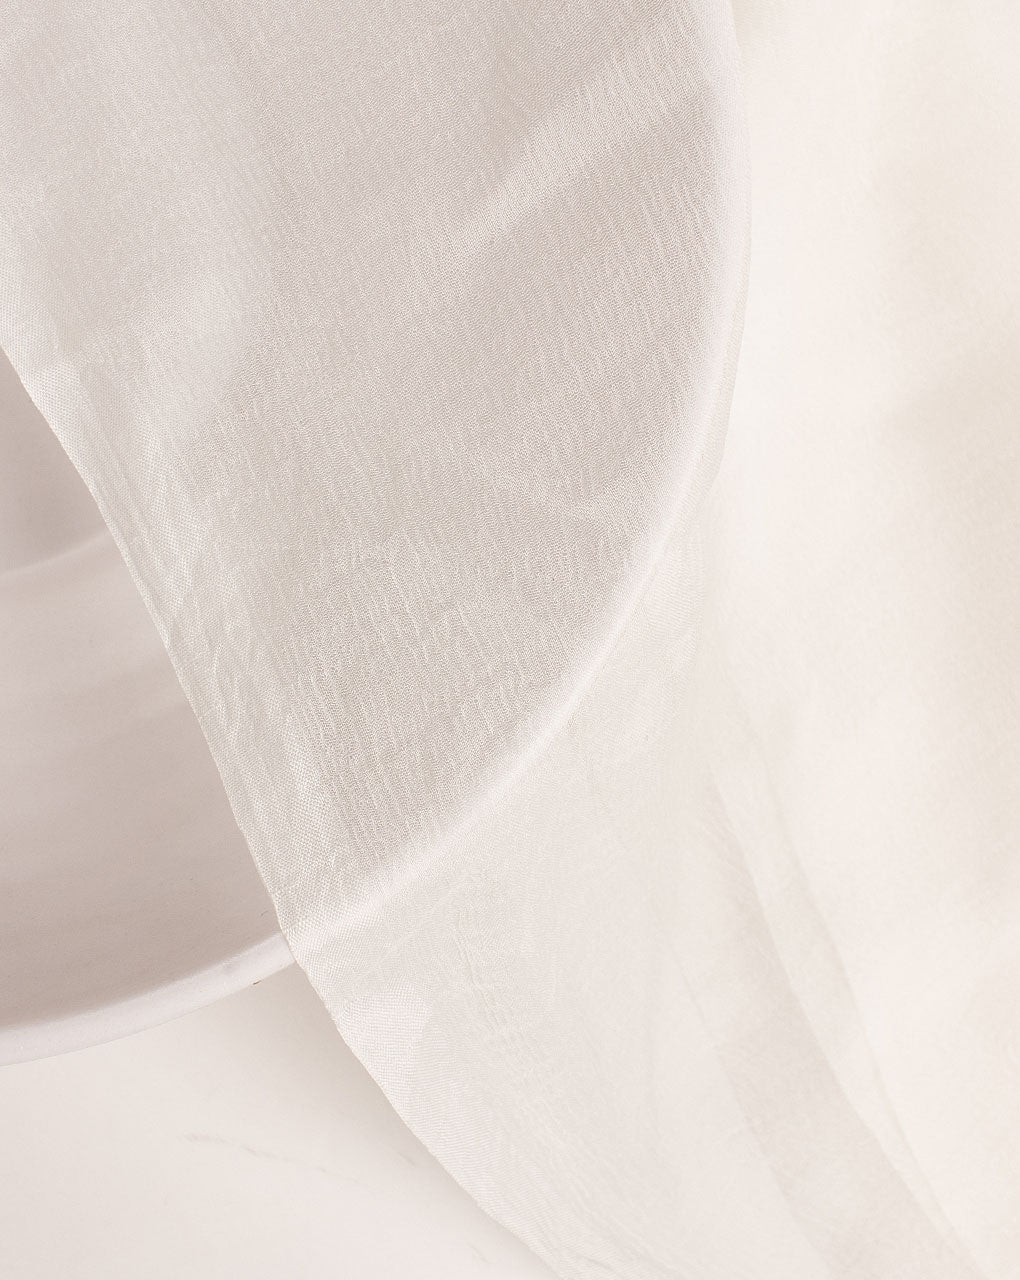 30x30 Dyeable Chiffon Fabric ( Width 36 Inch ) - Fabriclore.com